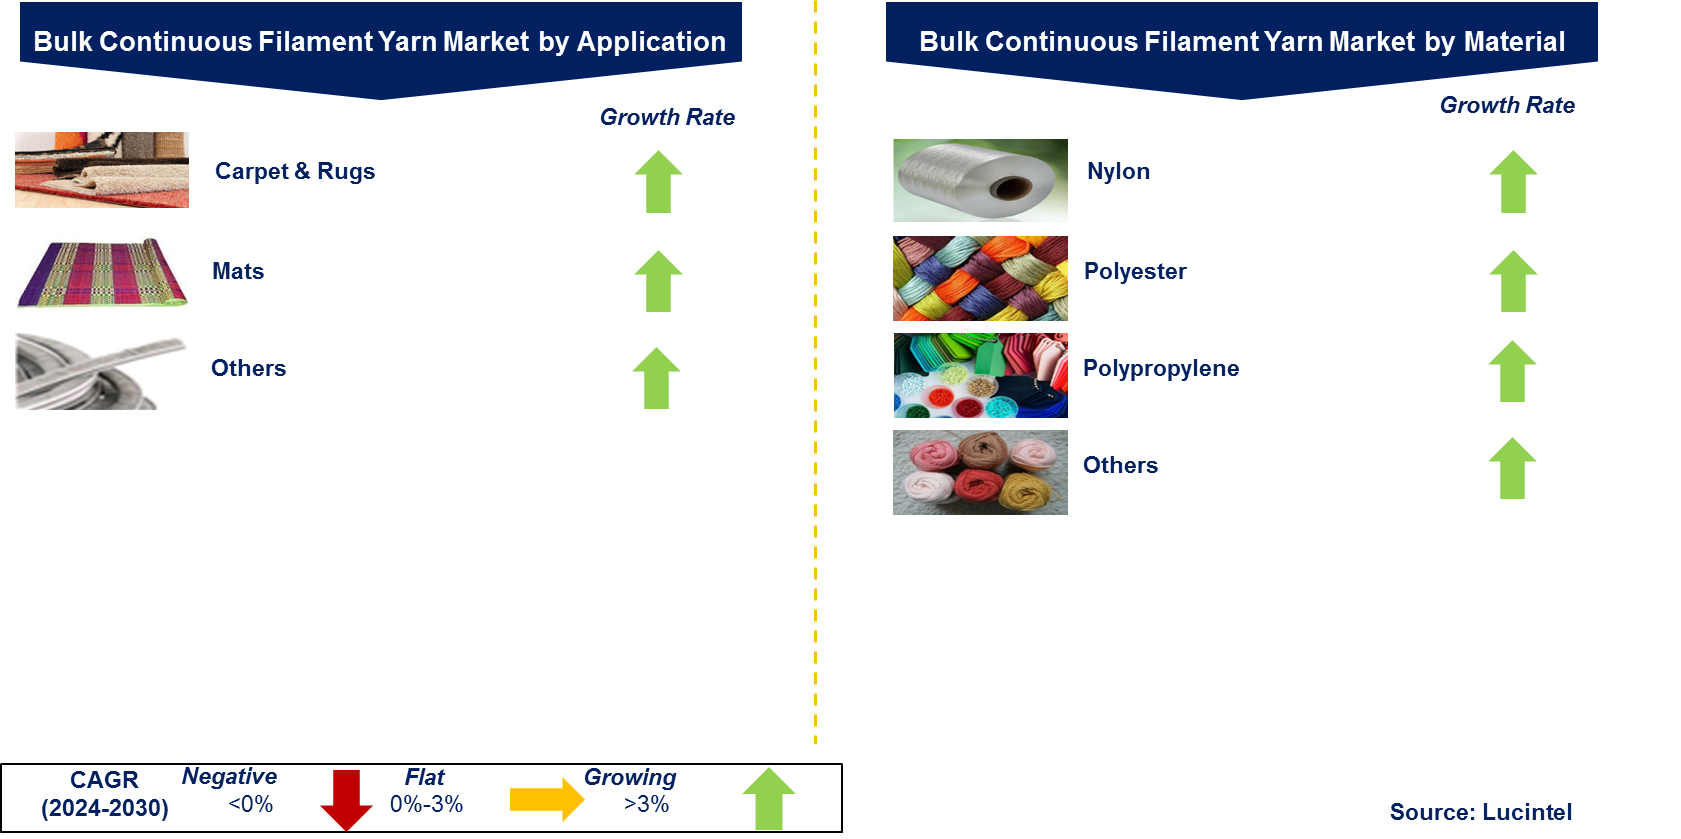 Bulk Continuous Filament Yarn Market by Segments